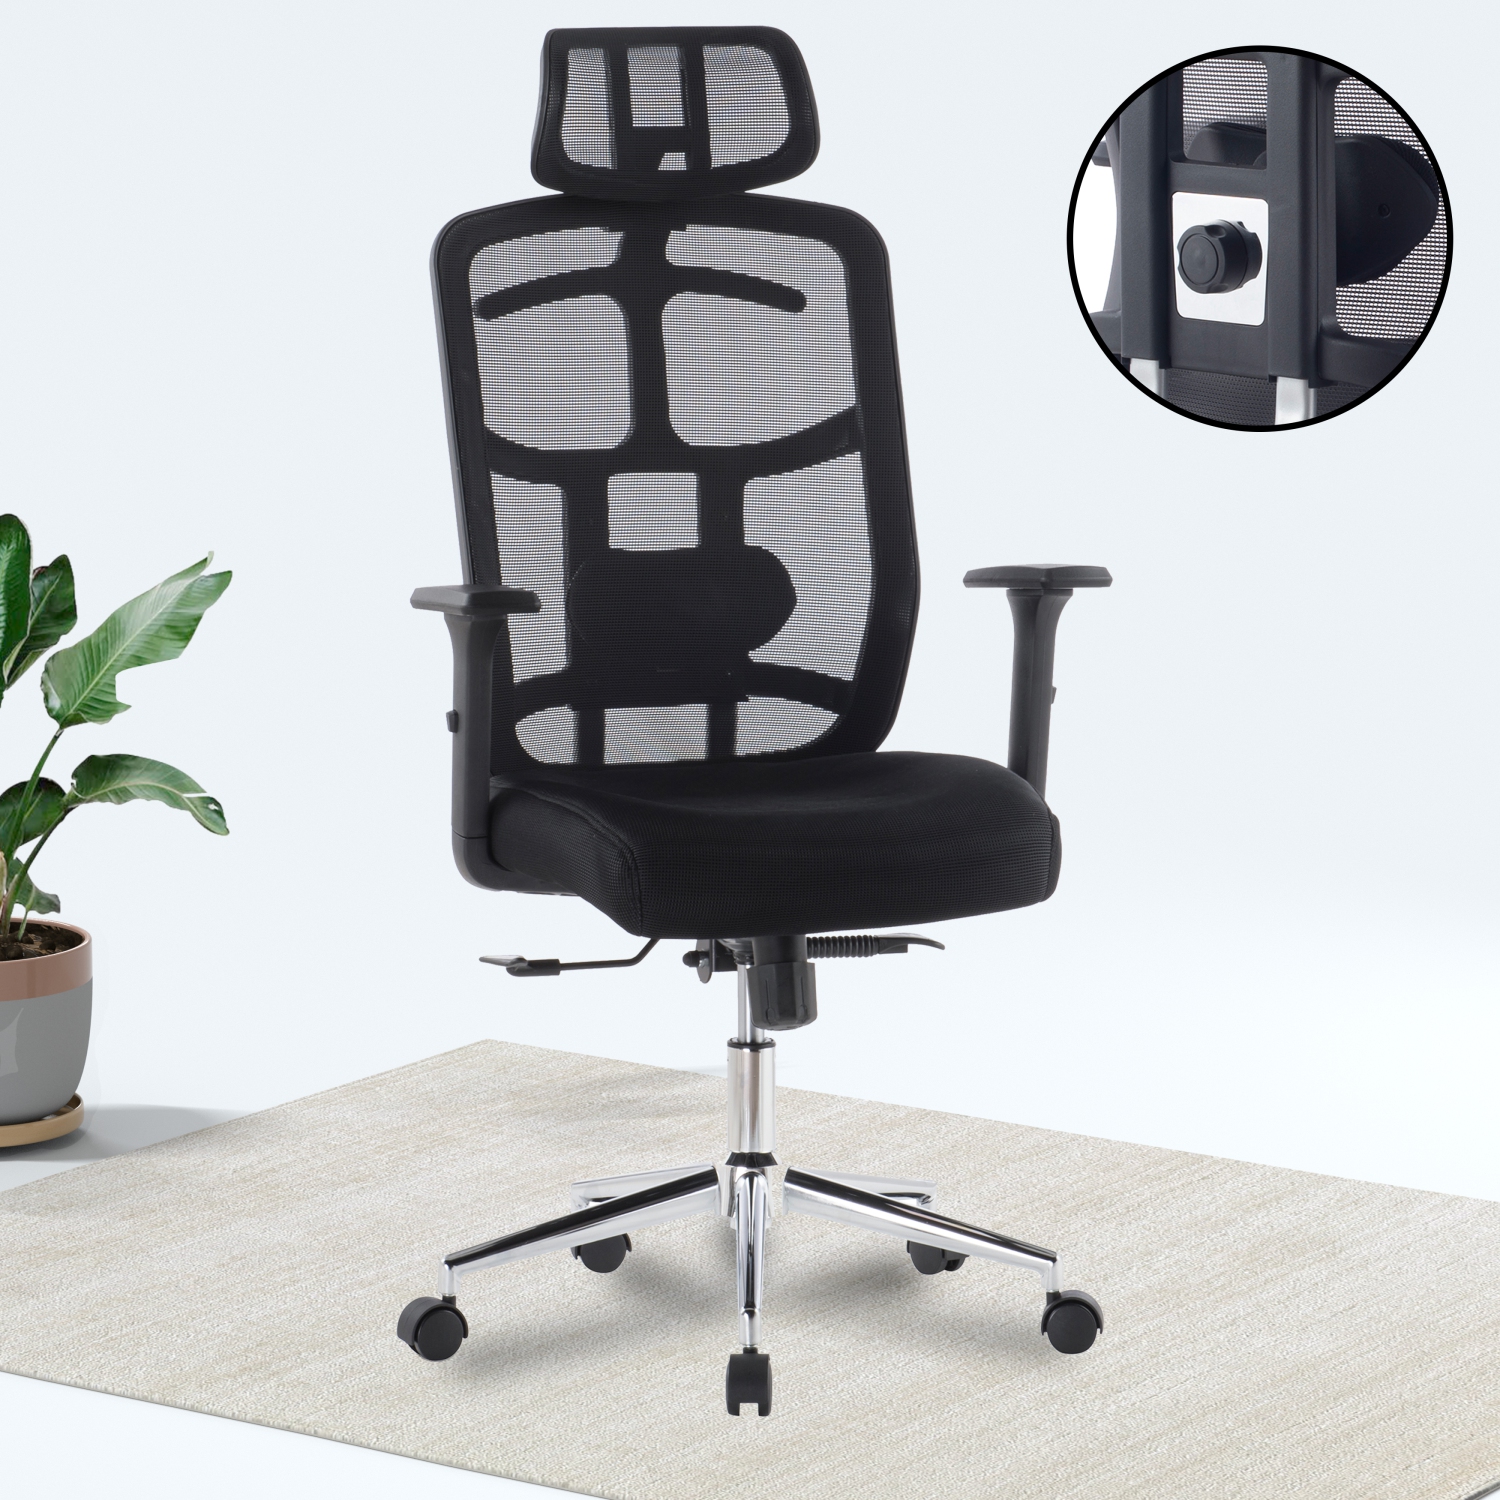 Billups ergonomic mesh task chair review